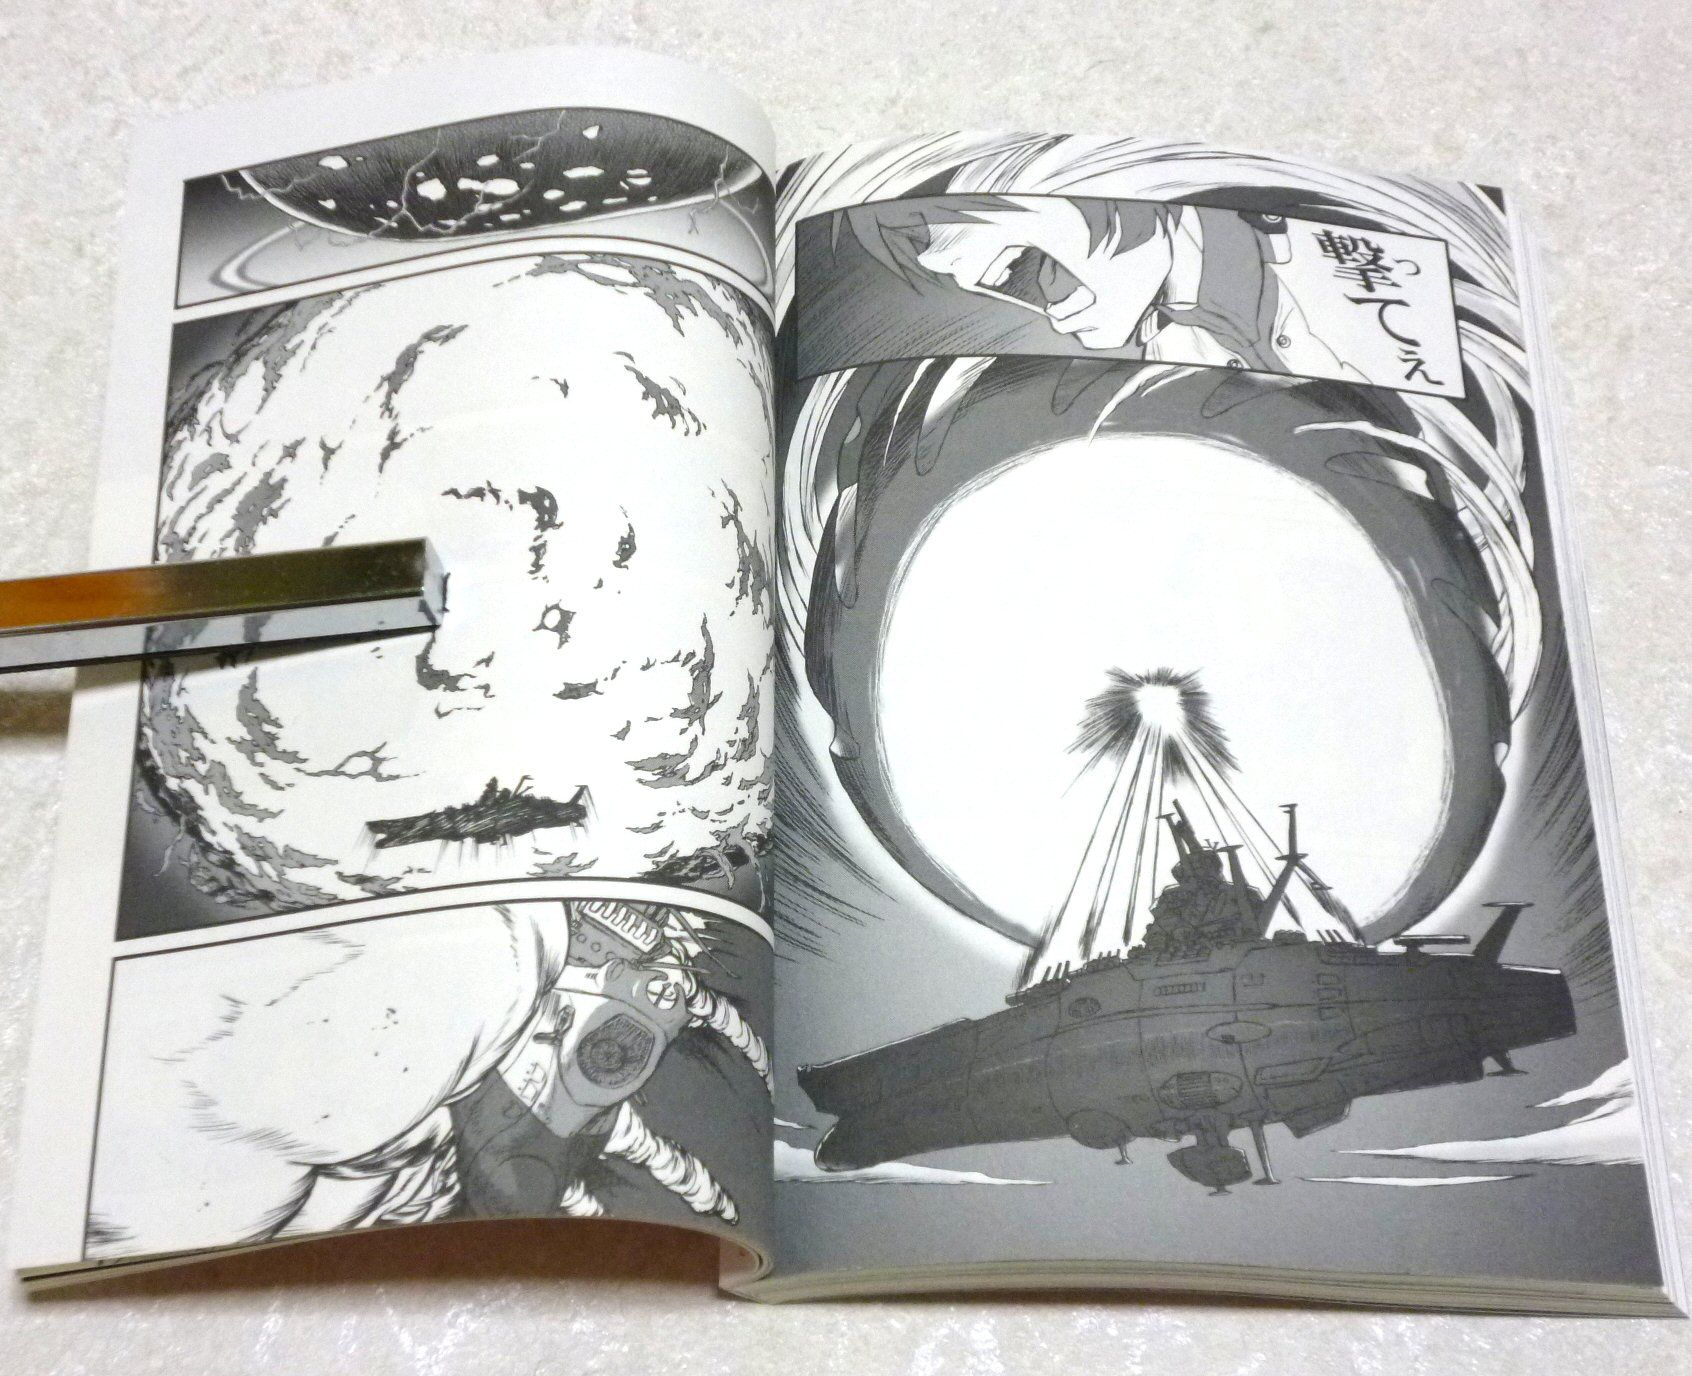 Space Battleship Yamato 2199 Manga Book 01 Star Blazers SF Anime Comic